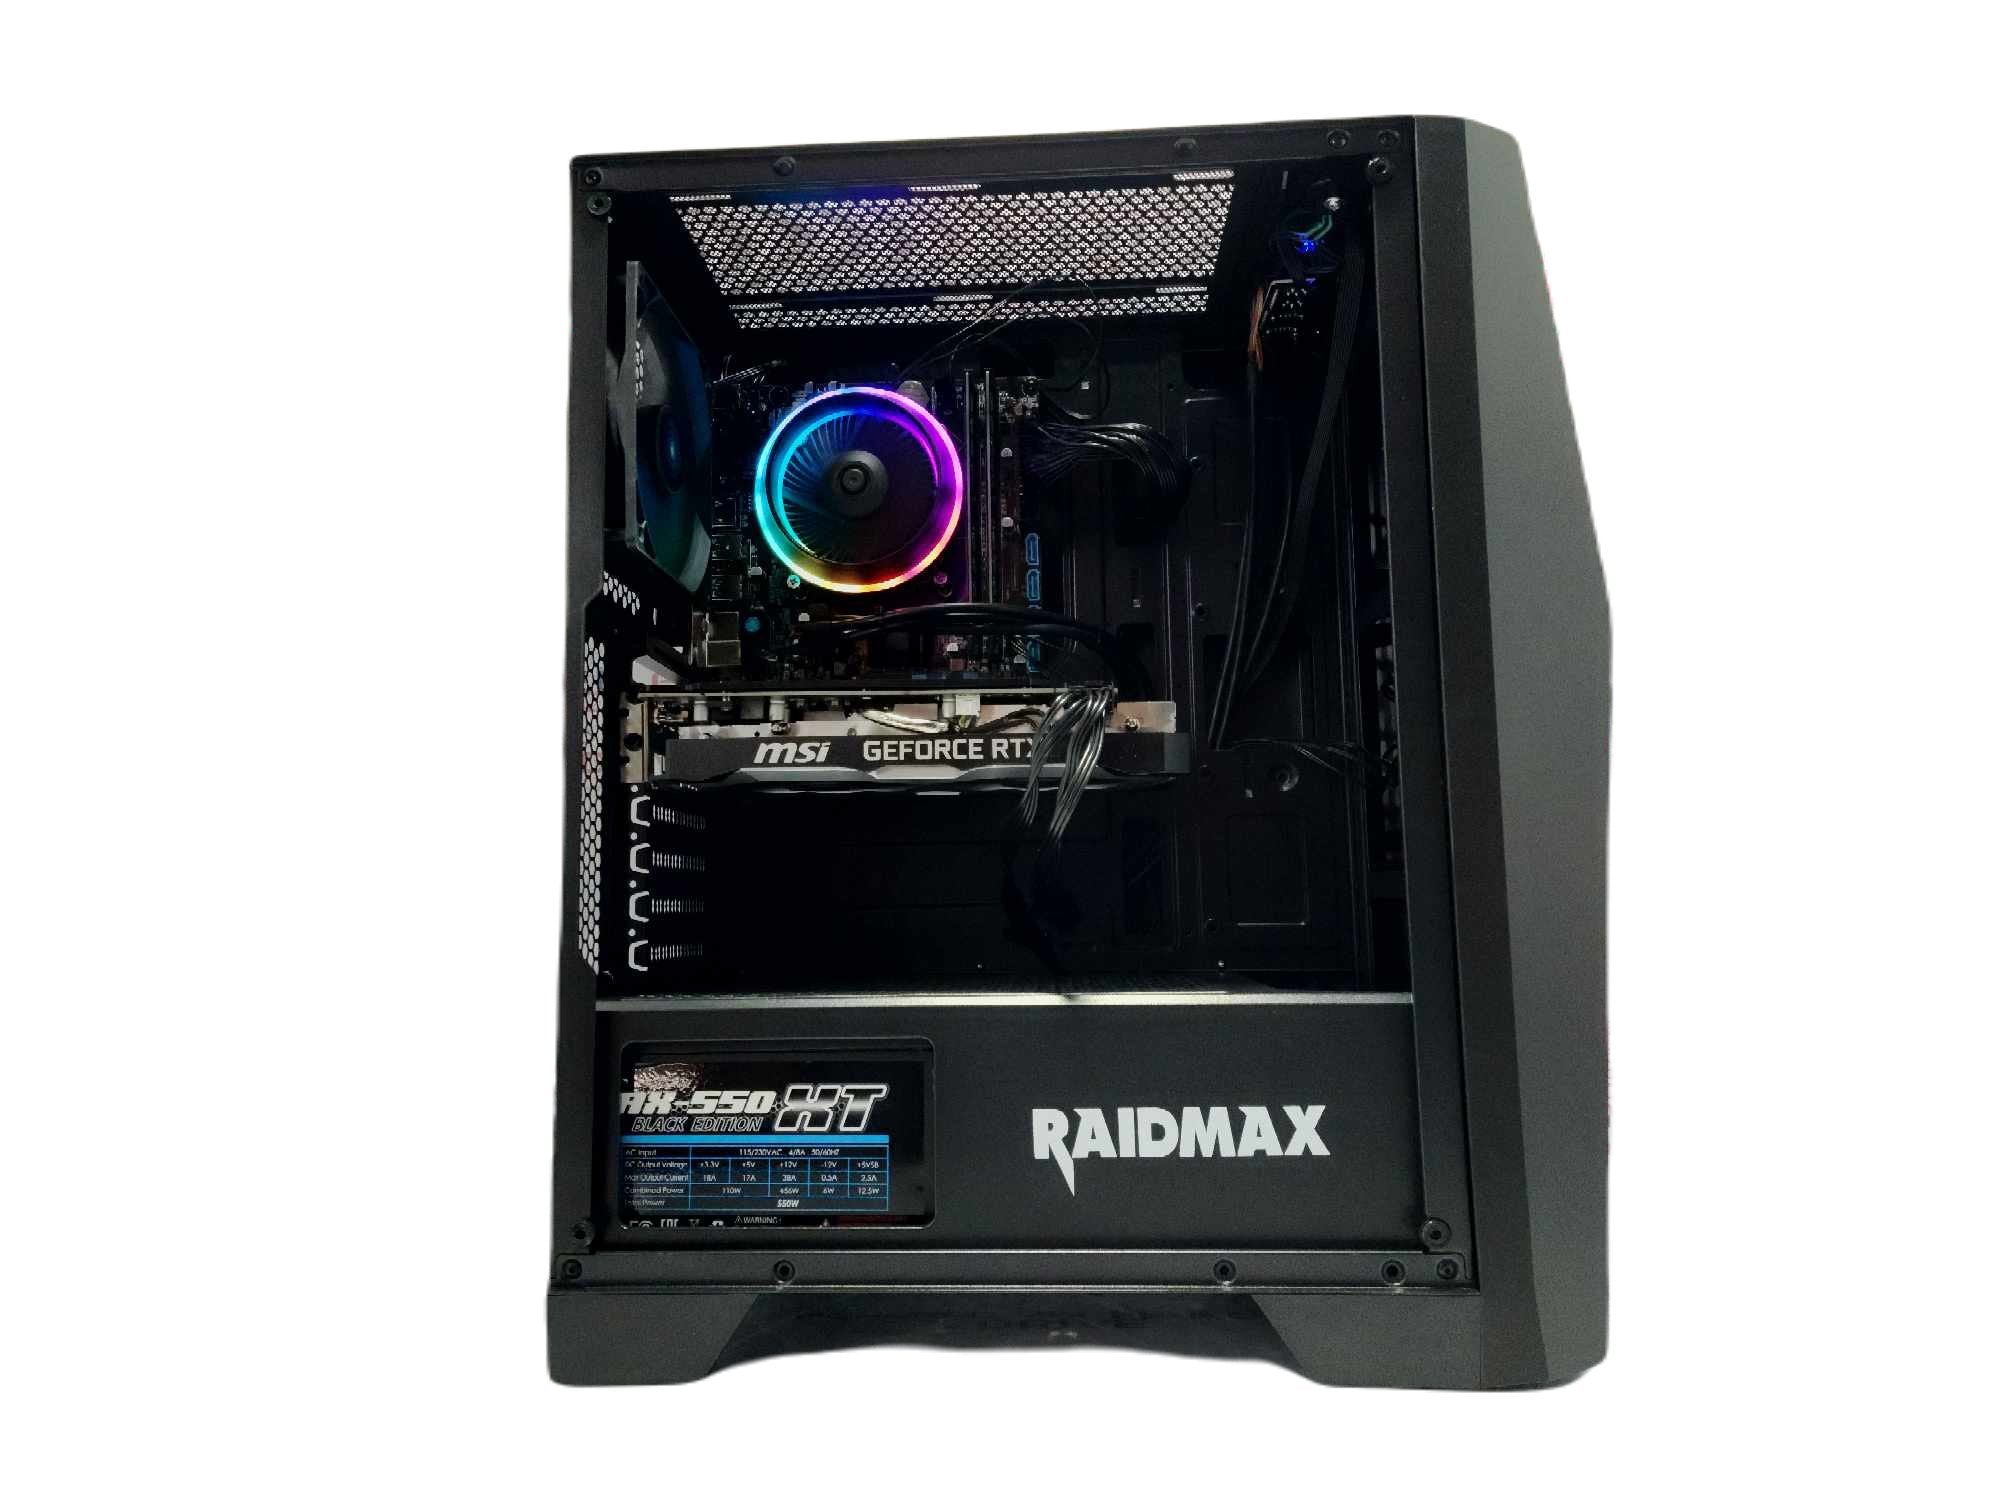 Custom Gaming Desktop PC Ryzen 3 Quad-Core 1TB SSD RTX 2060 16gb Black S811 A520 - Geek Tech